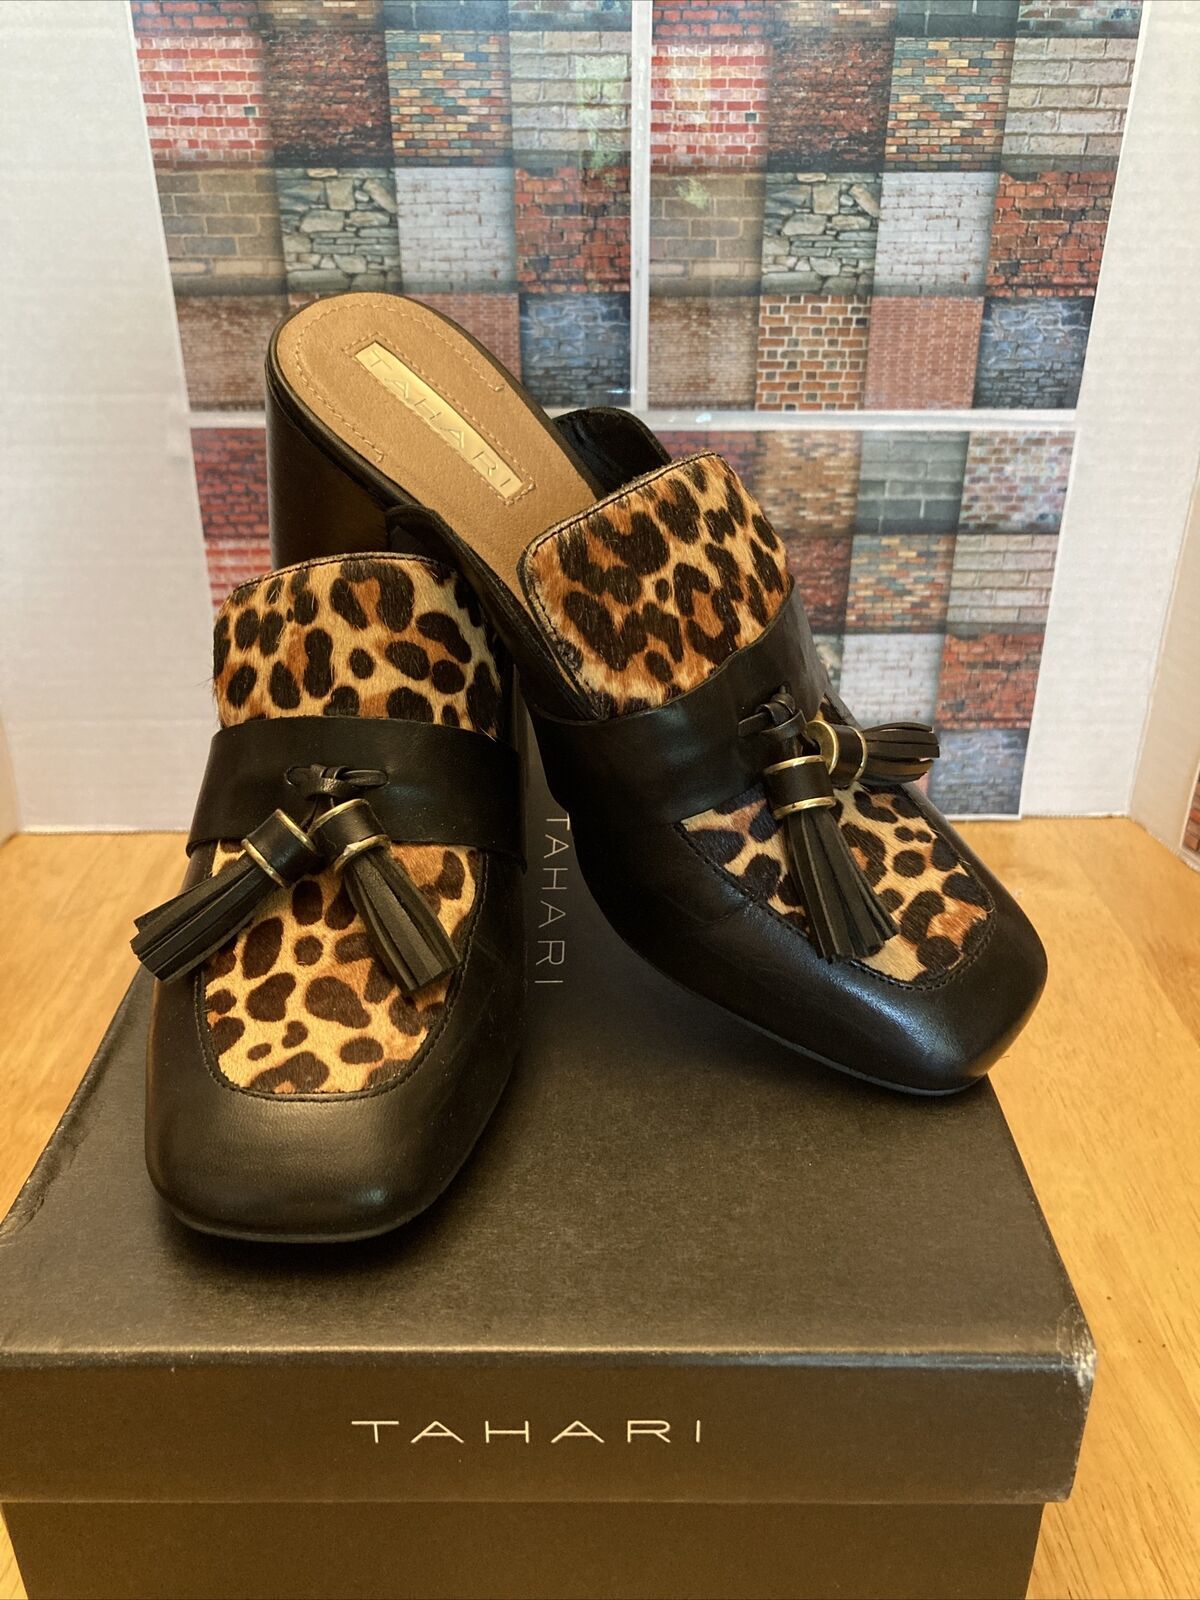 New Tahari Porter Women’s Black Leopard Leather Heel Mules Sz 6 - $65.00